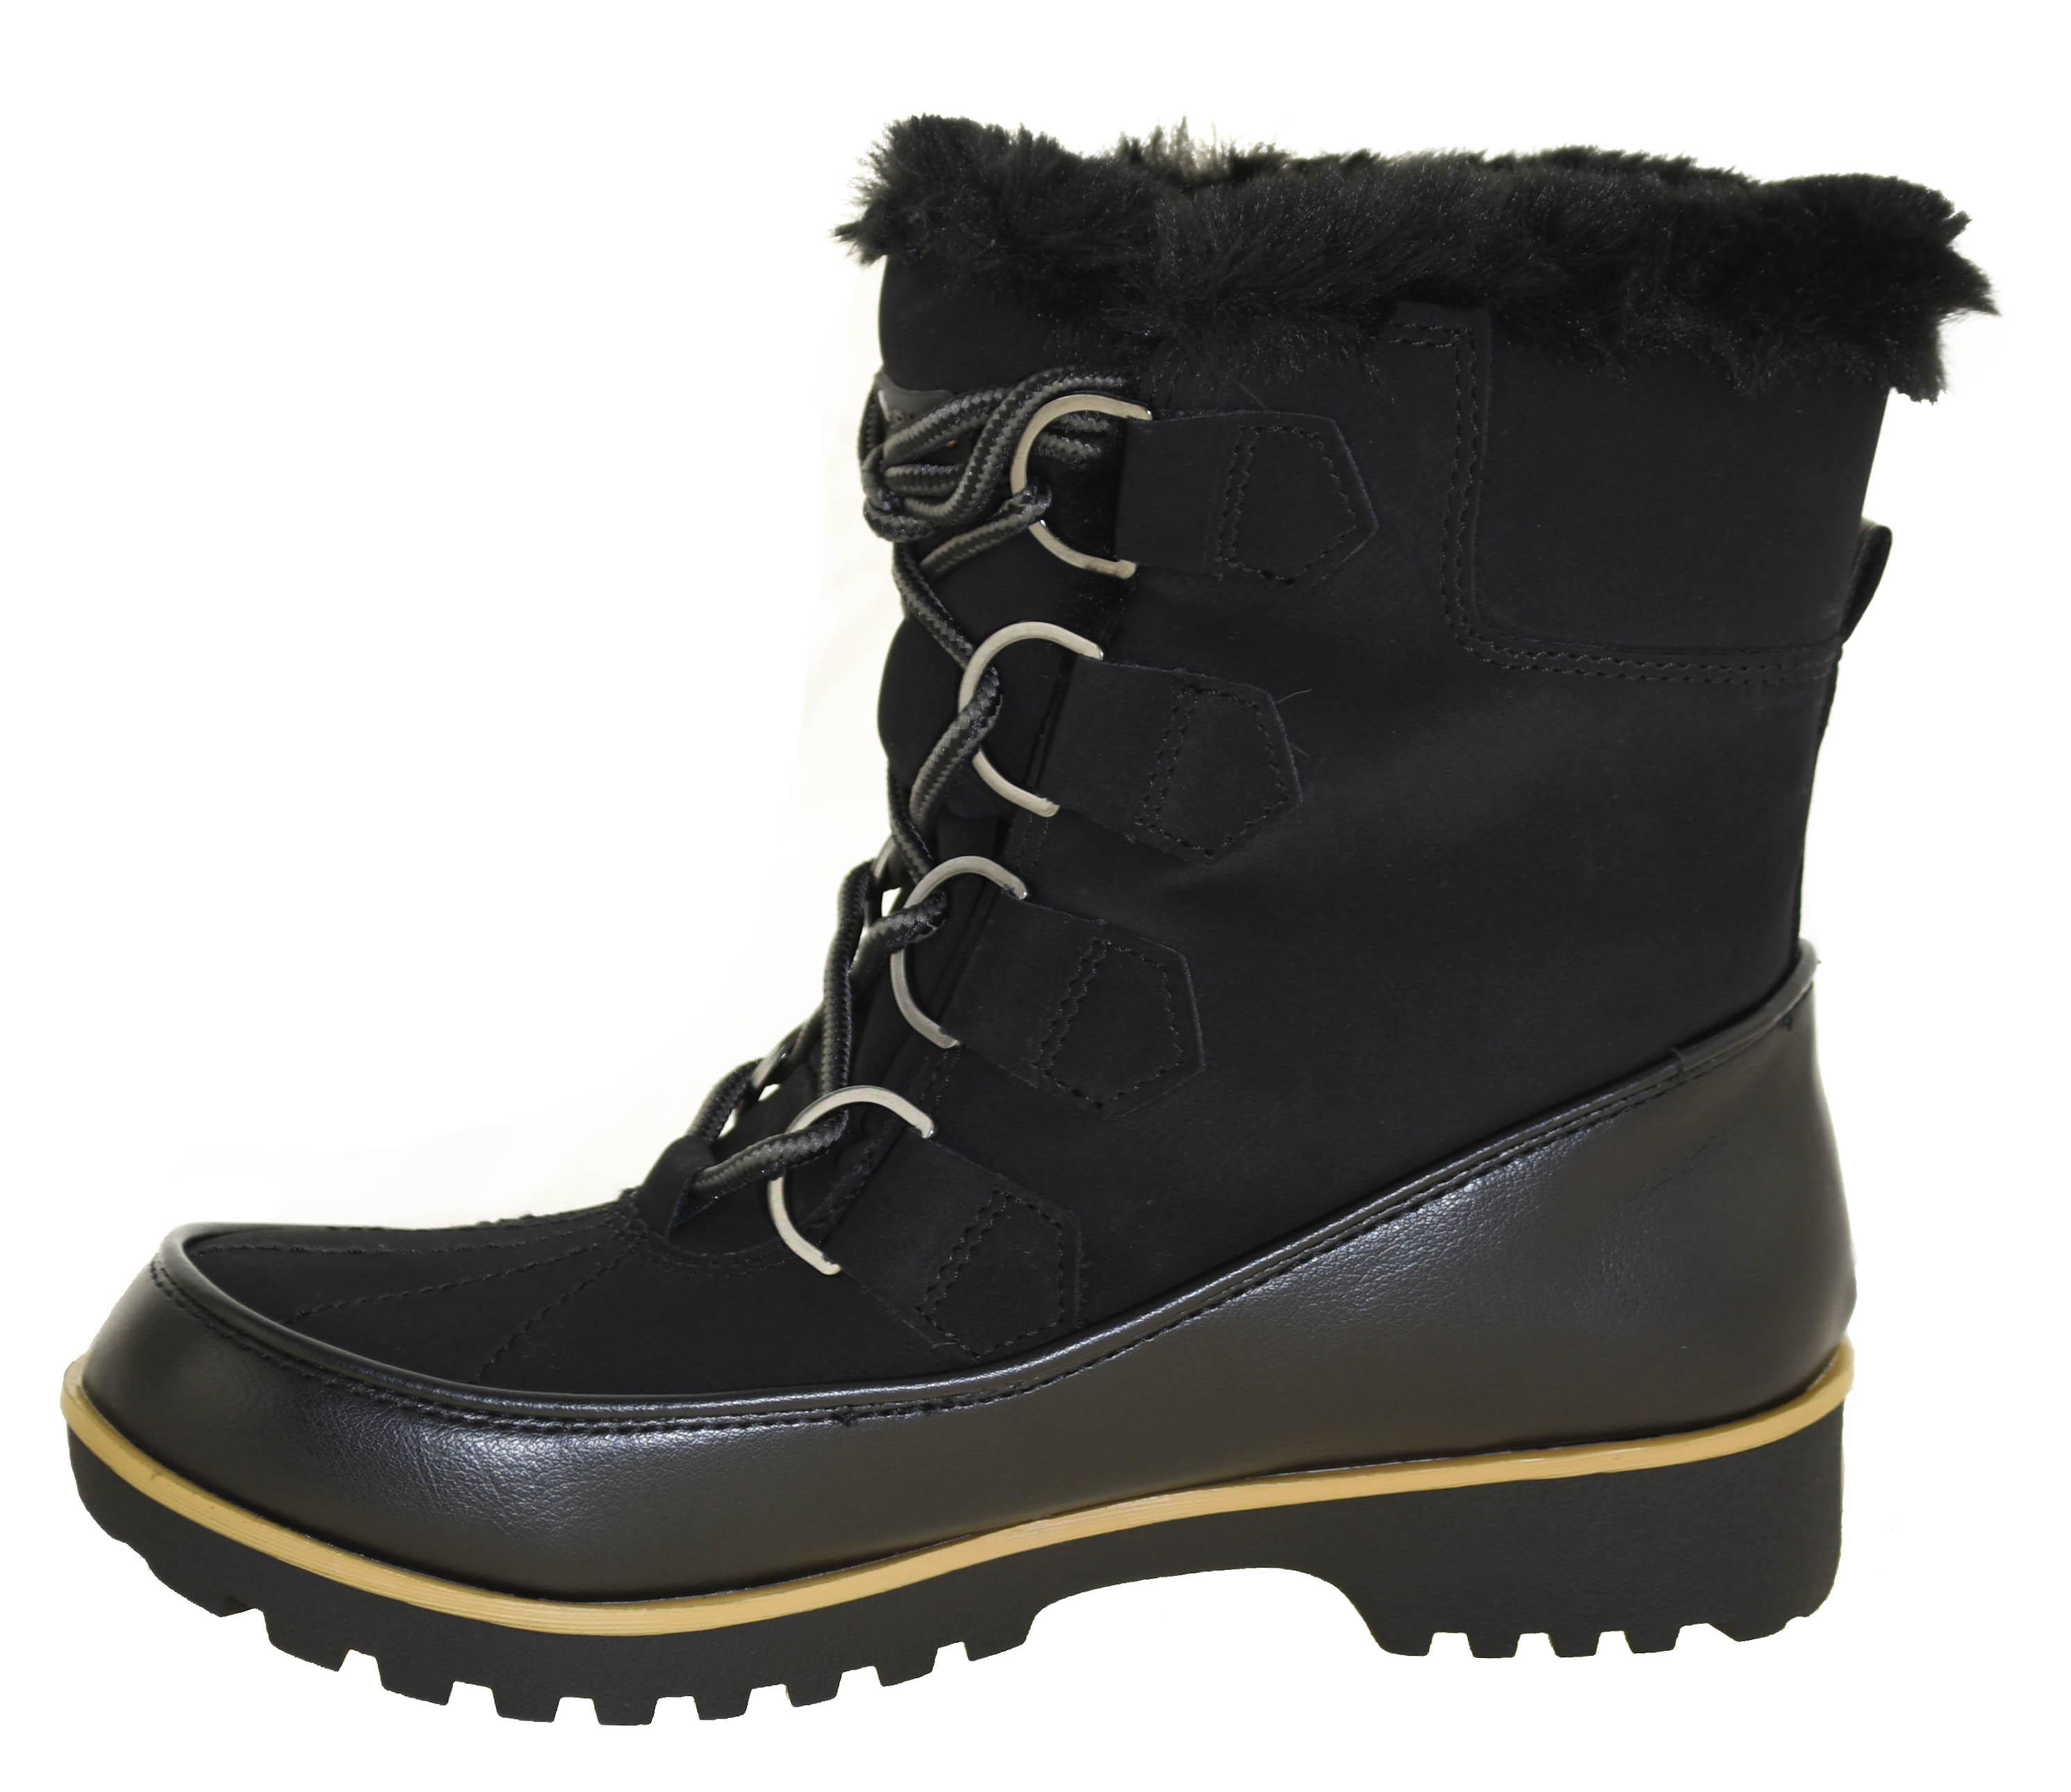 JBU by Jambu Women's Manchester Winter Boots Black | eBay